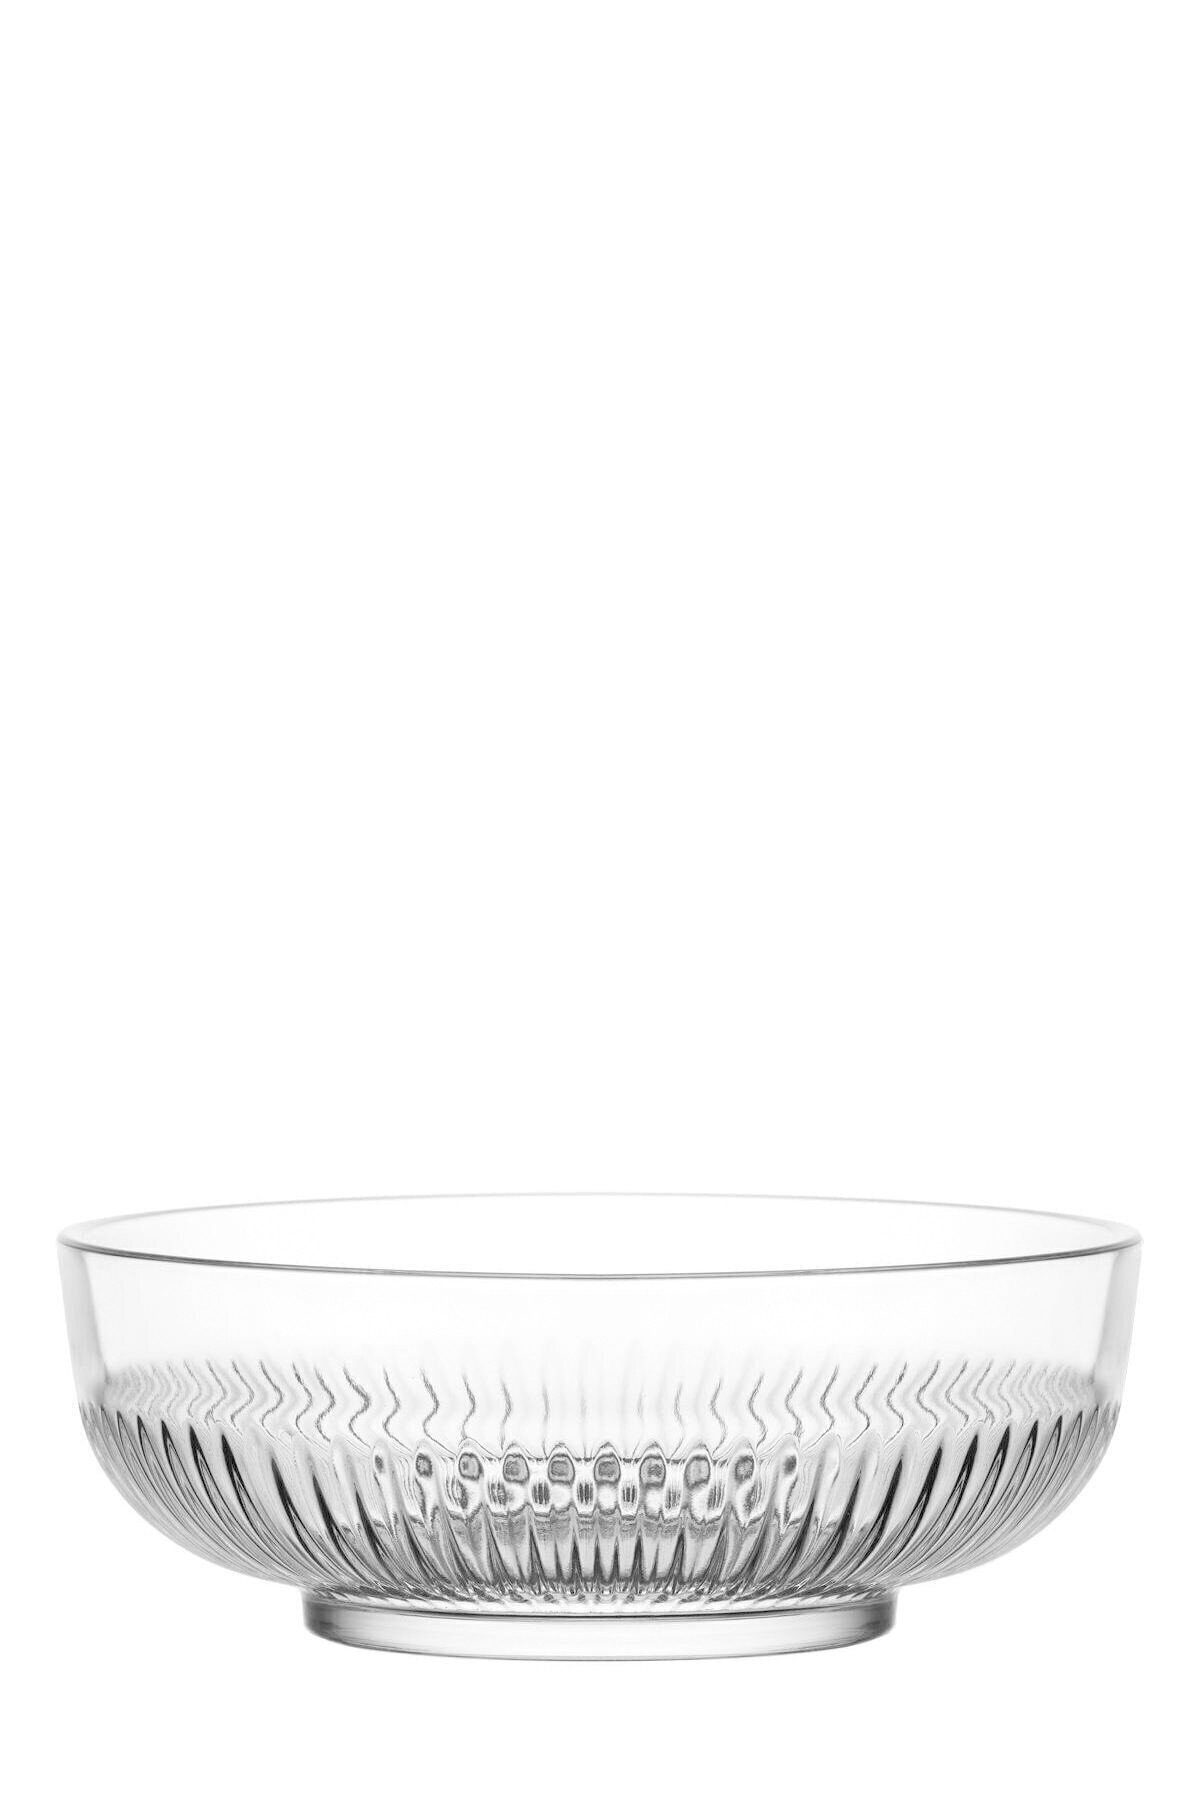 Schüsseln, Hermia LAV1708, Transparent, Concept Schüssel 100% Glas